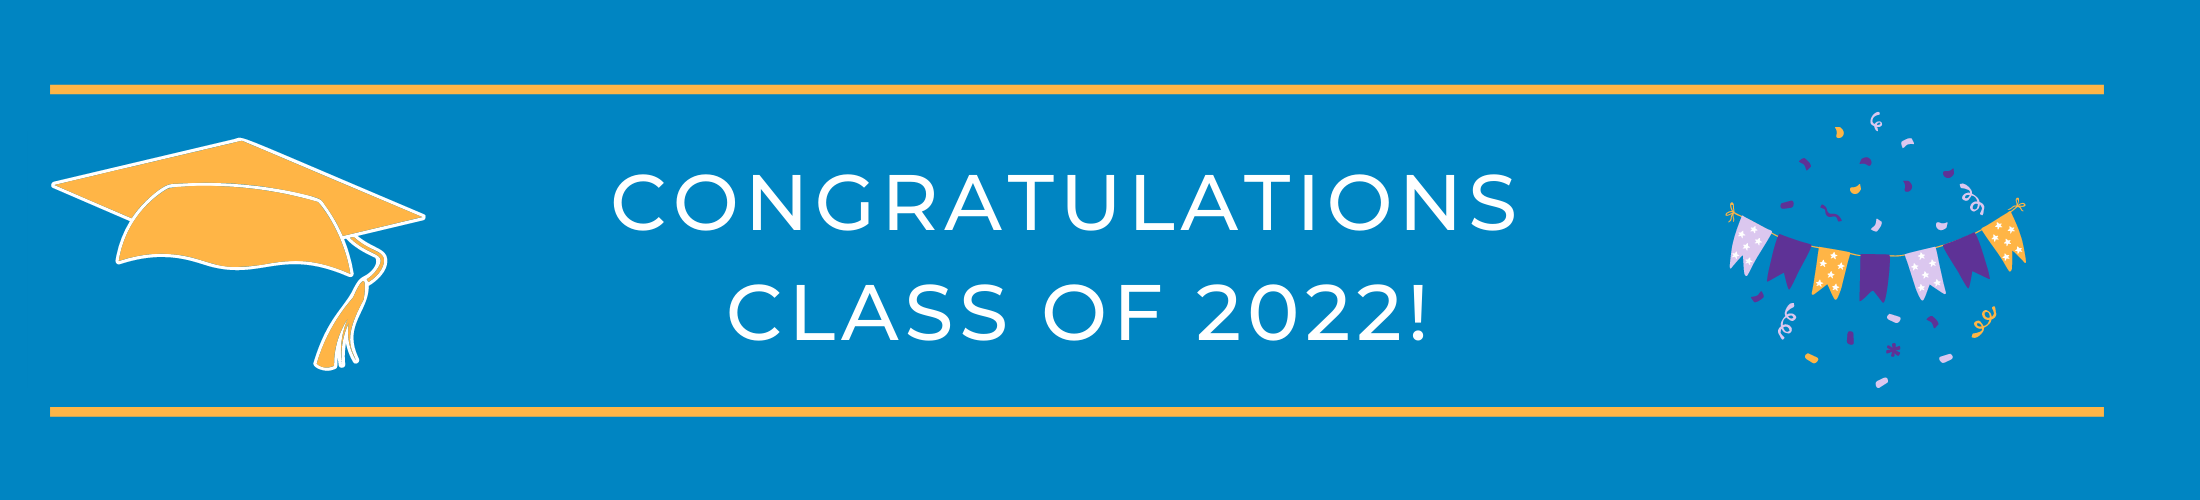 Congrats to Galin Education’s Class of 2022!